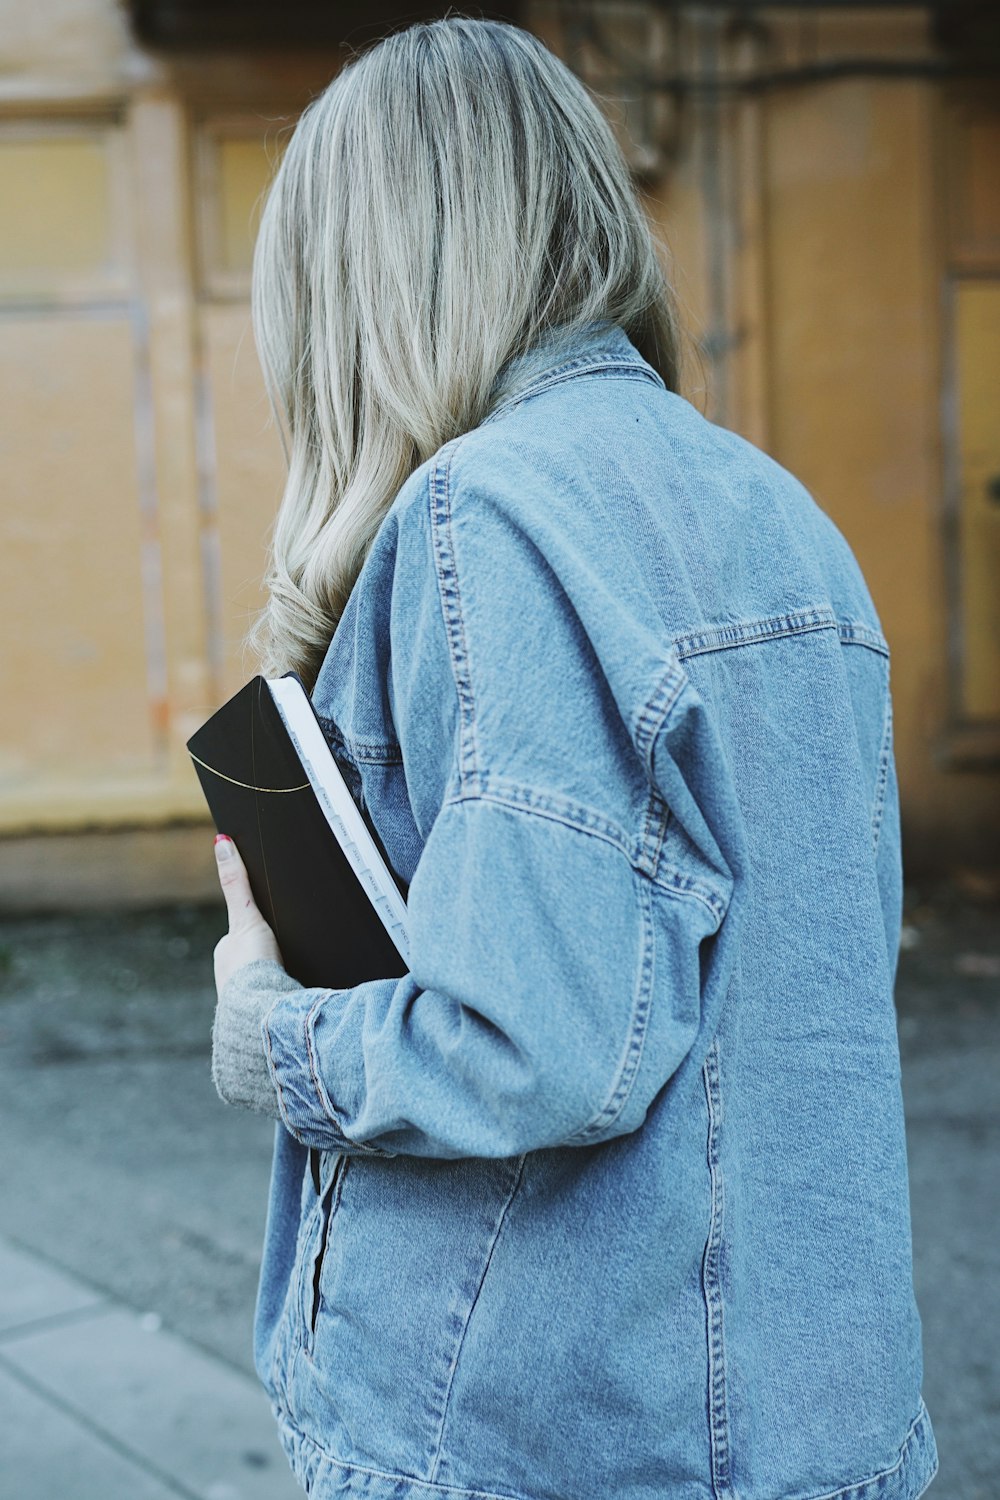 woman wearing blue denim jacket holding black book